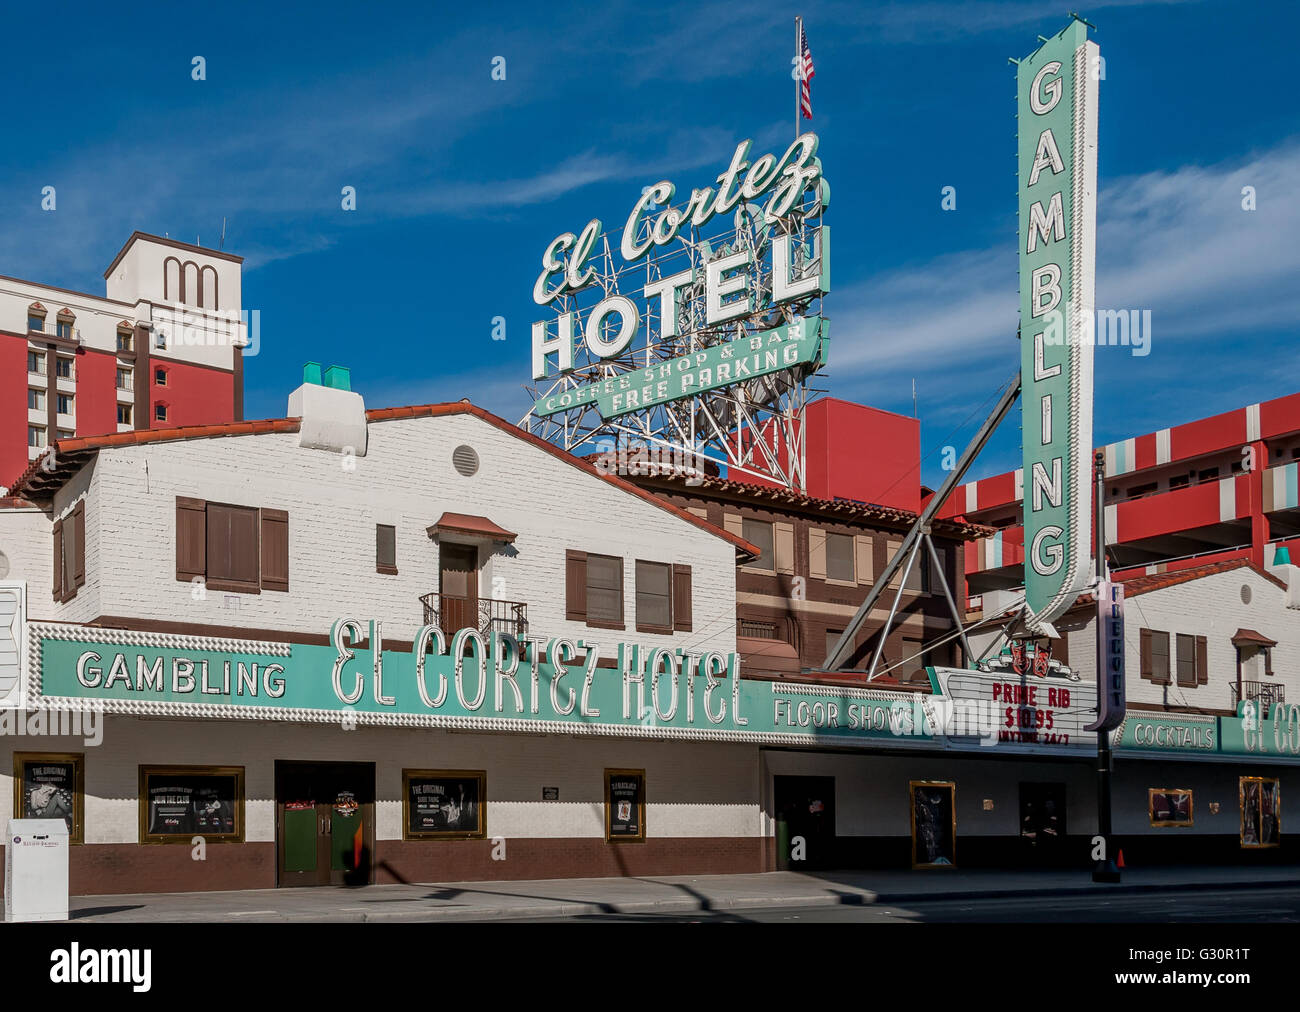 El Cortez Hotel + casino su East Fremont Street nella vecchia Las Vegas, Nevada; ripristinata Las Vegas landmark w/ vintage insegne al neon. Foto Stock